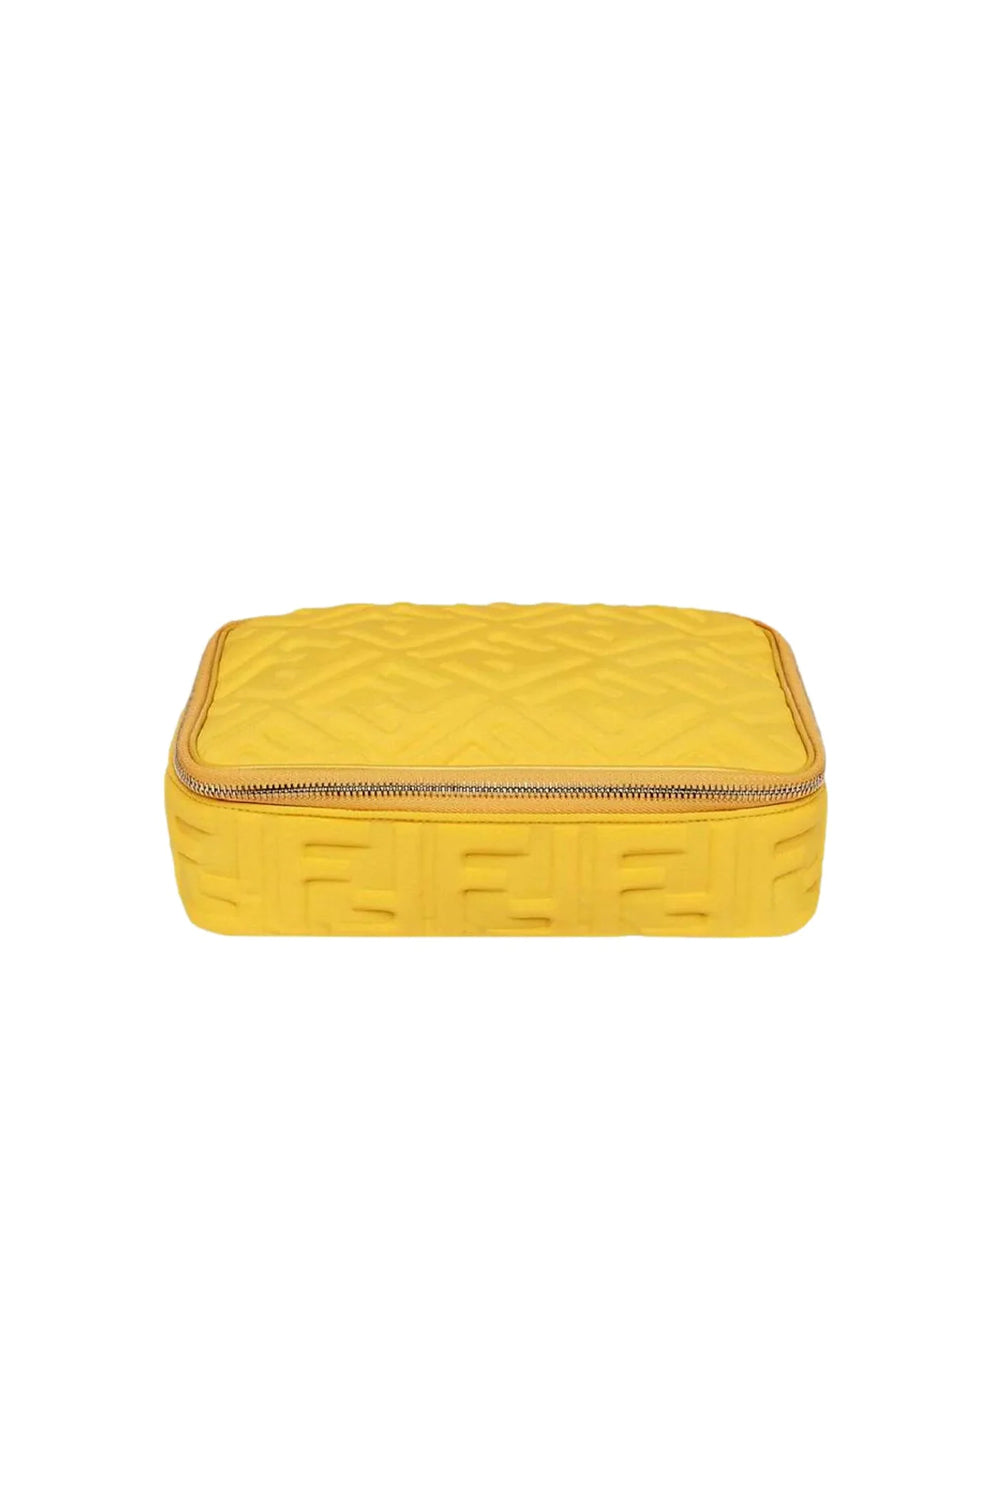 Fendi FF Embossed Lycra Yellow Cosmetic Case Medium